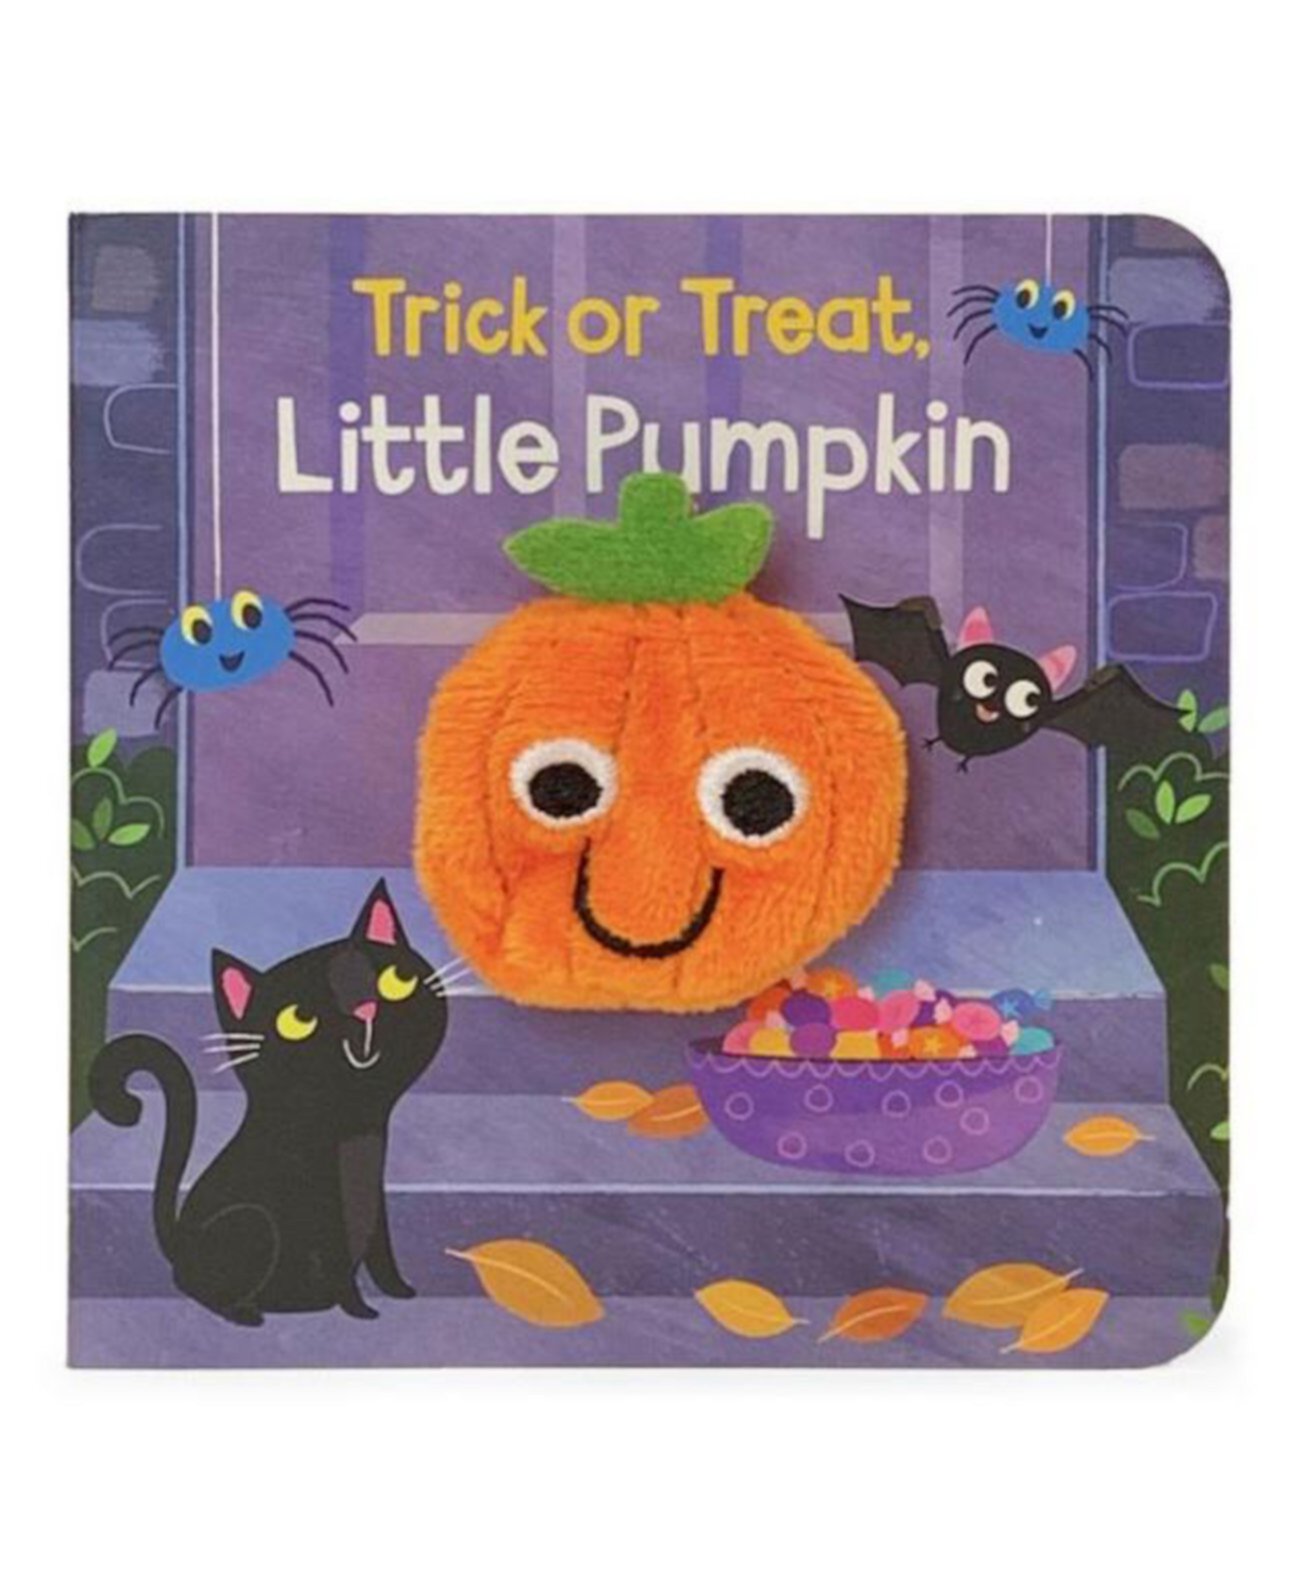 Trick or Treat, Little Pumpkin by Rosa VonFeder Barnes & Noble